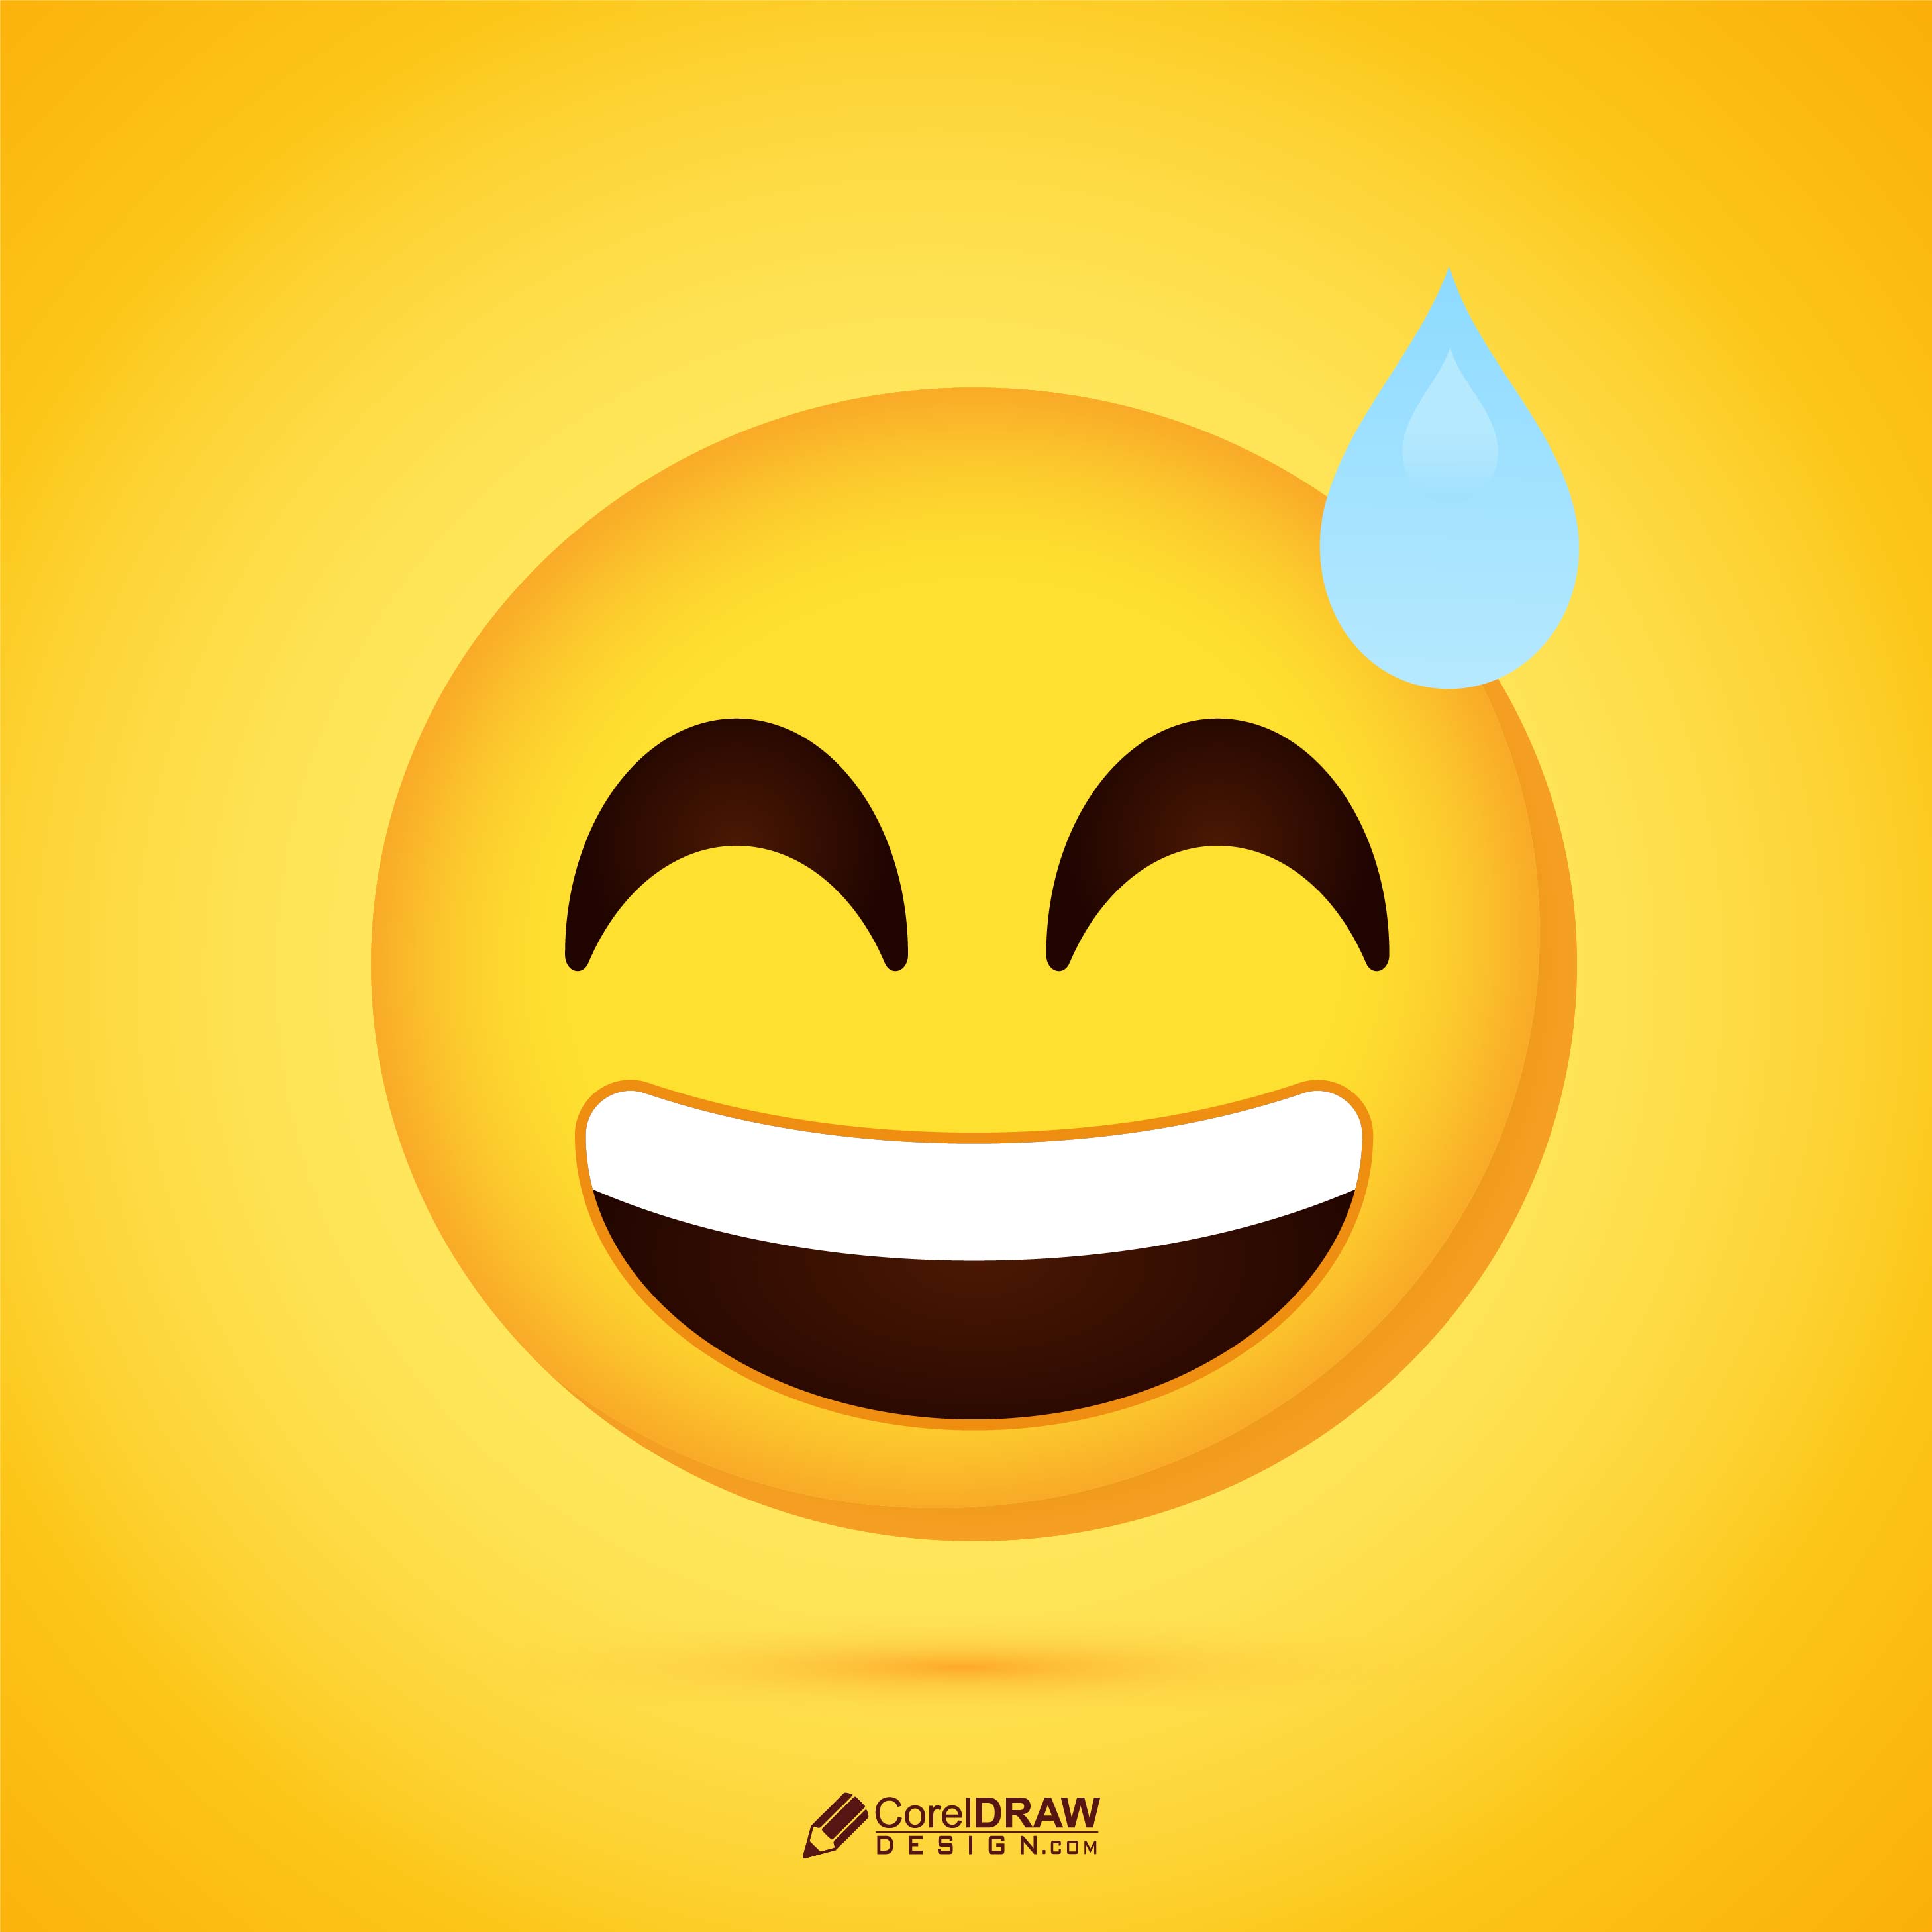 Abstract Funny Smiling Emoji Vector